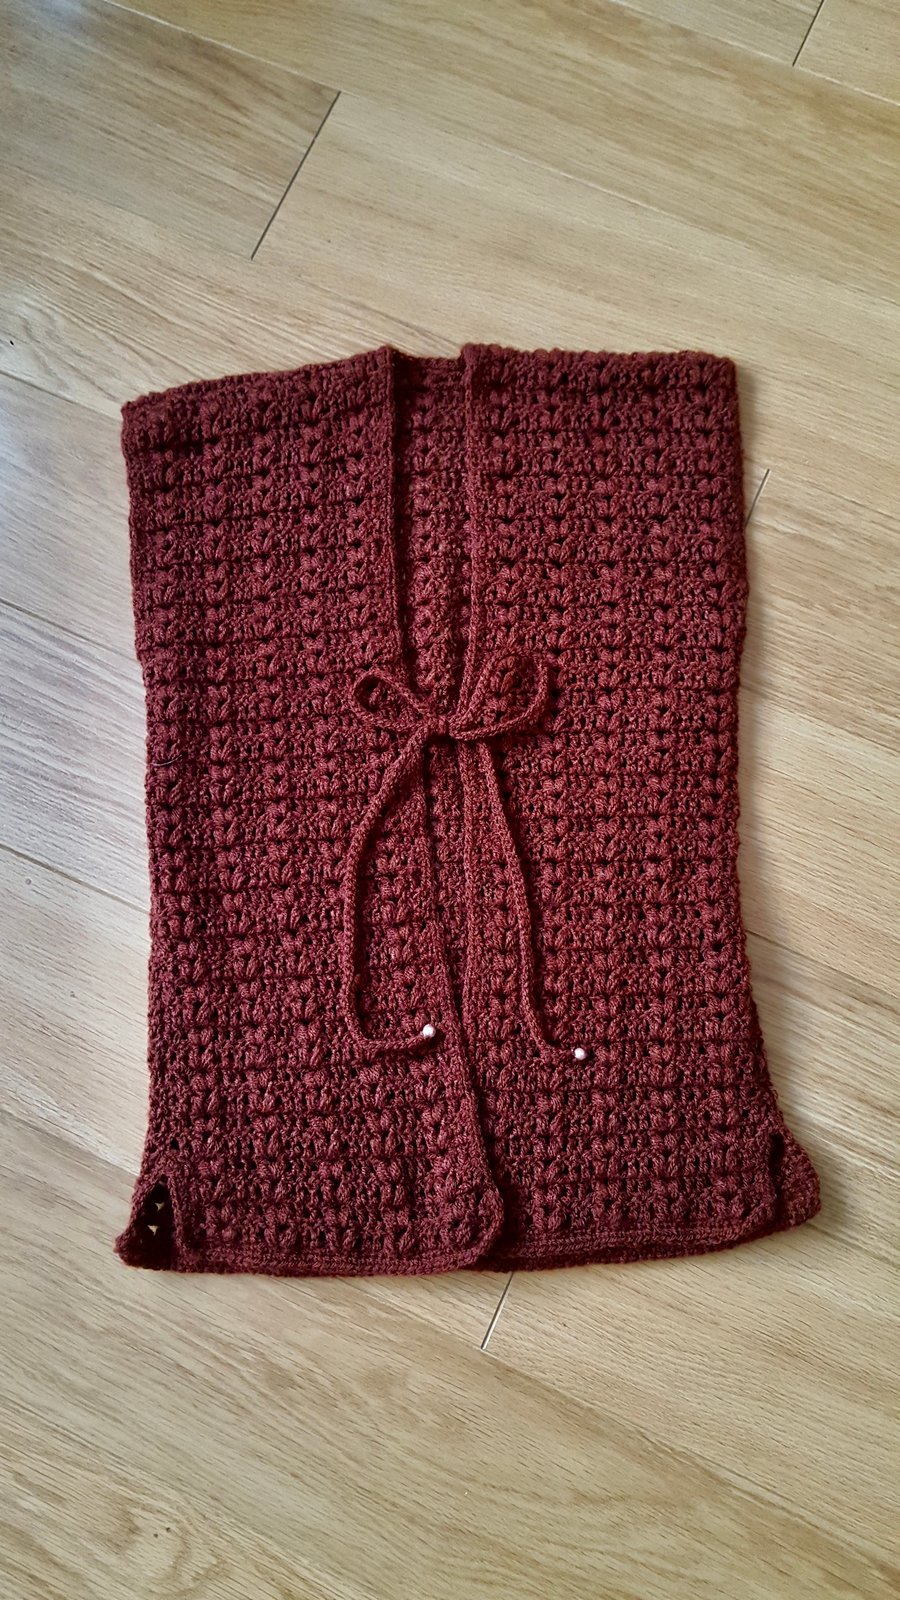 Handmade crochet sleeveless duster brown cardigan. UK size small to medium.